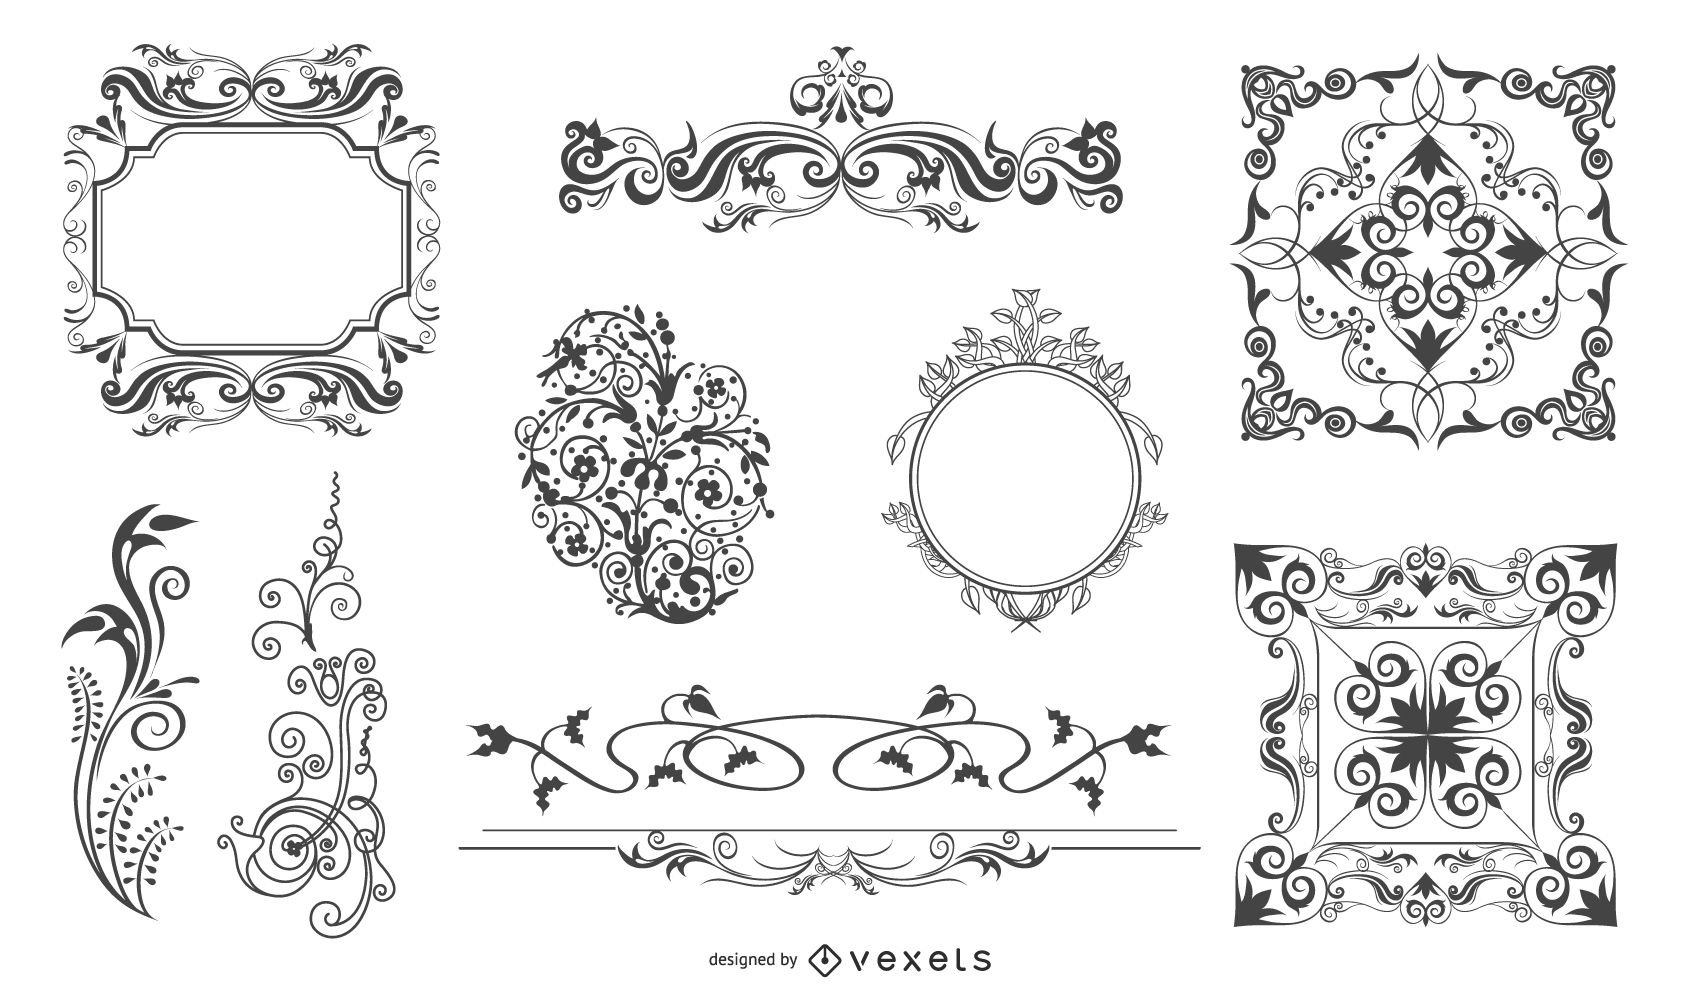 Ornamental Design Vector at Vectorified.com | Collection of Ornamental ...